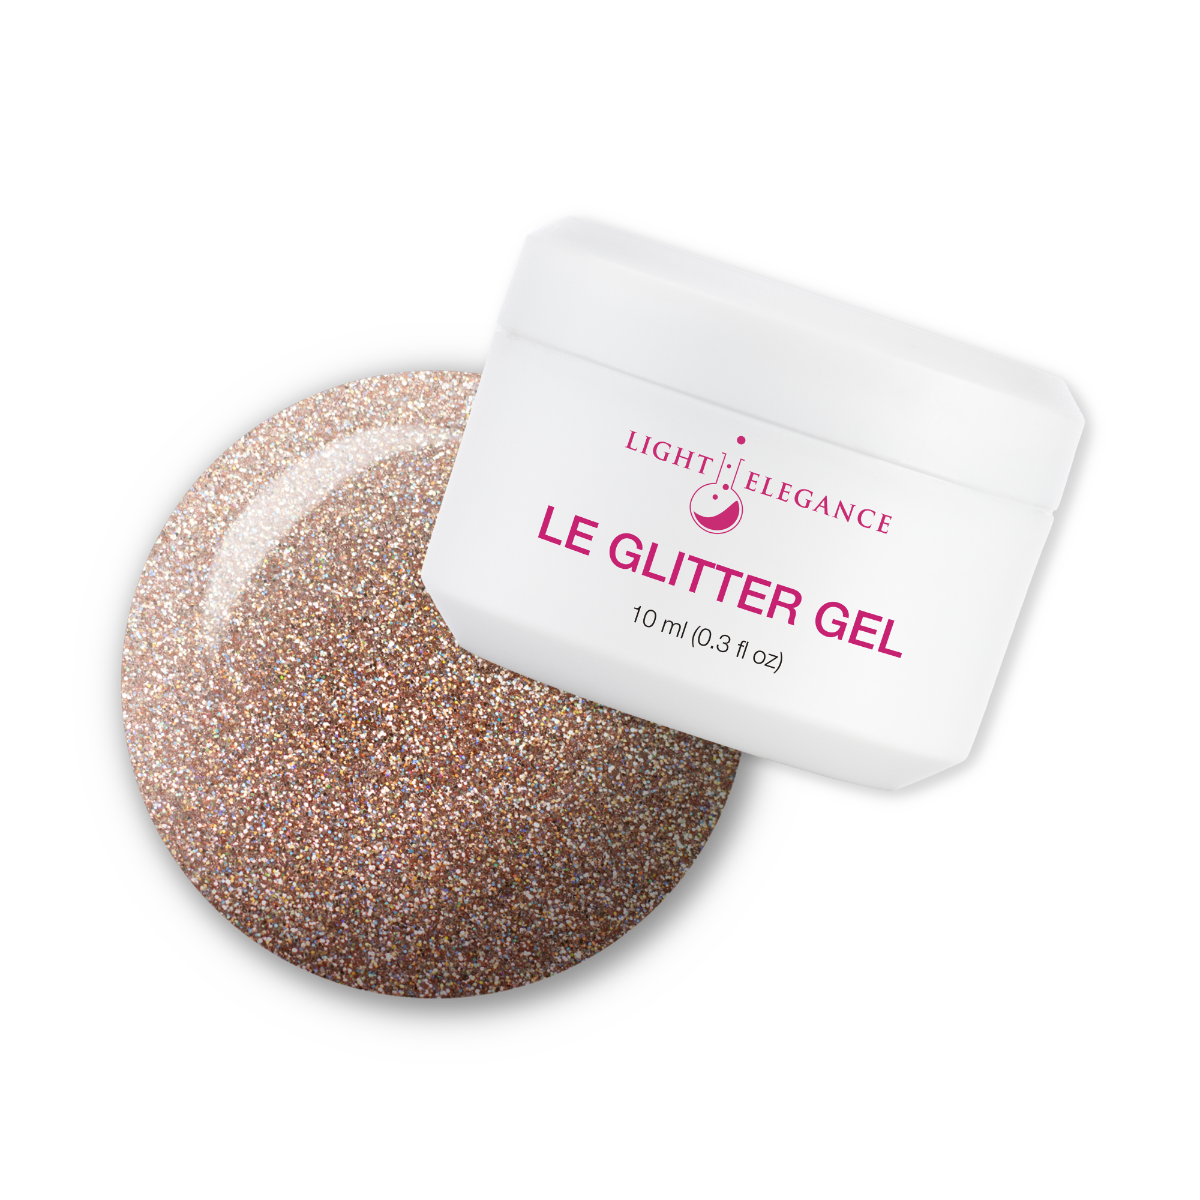 Light Elegance Glitter Gel - Mercury Meltdown :: New Packaging - Creata Beauty - Professional Beauty Products